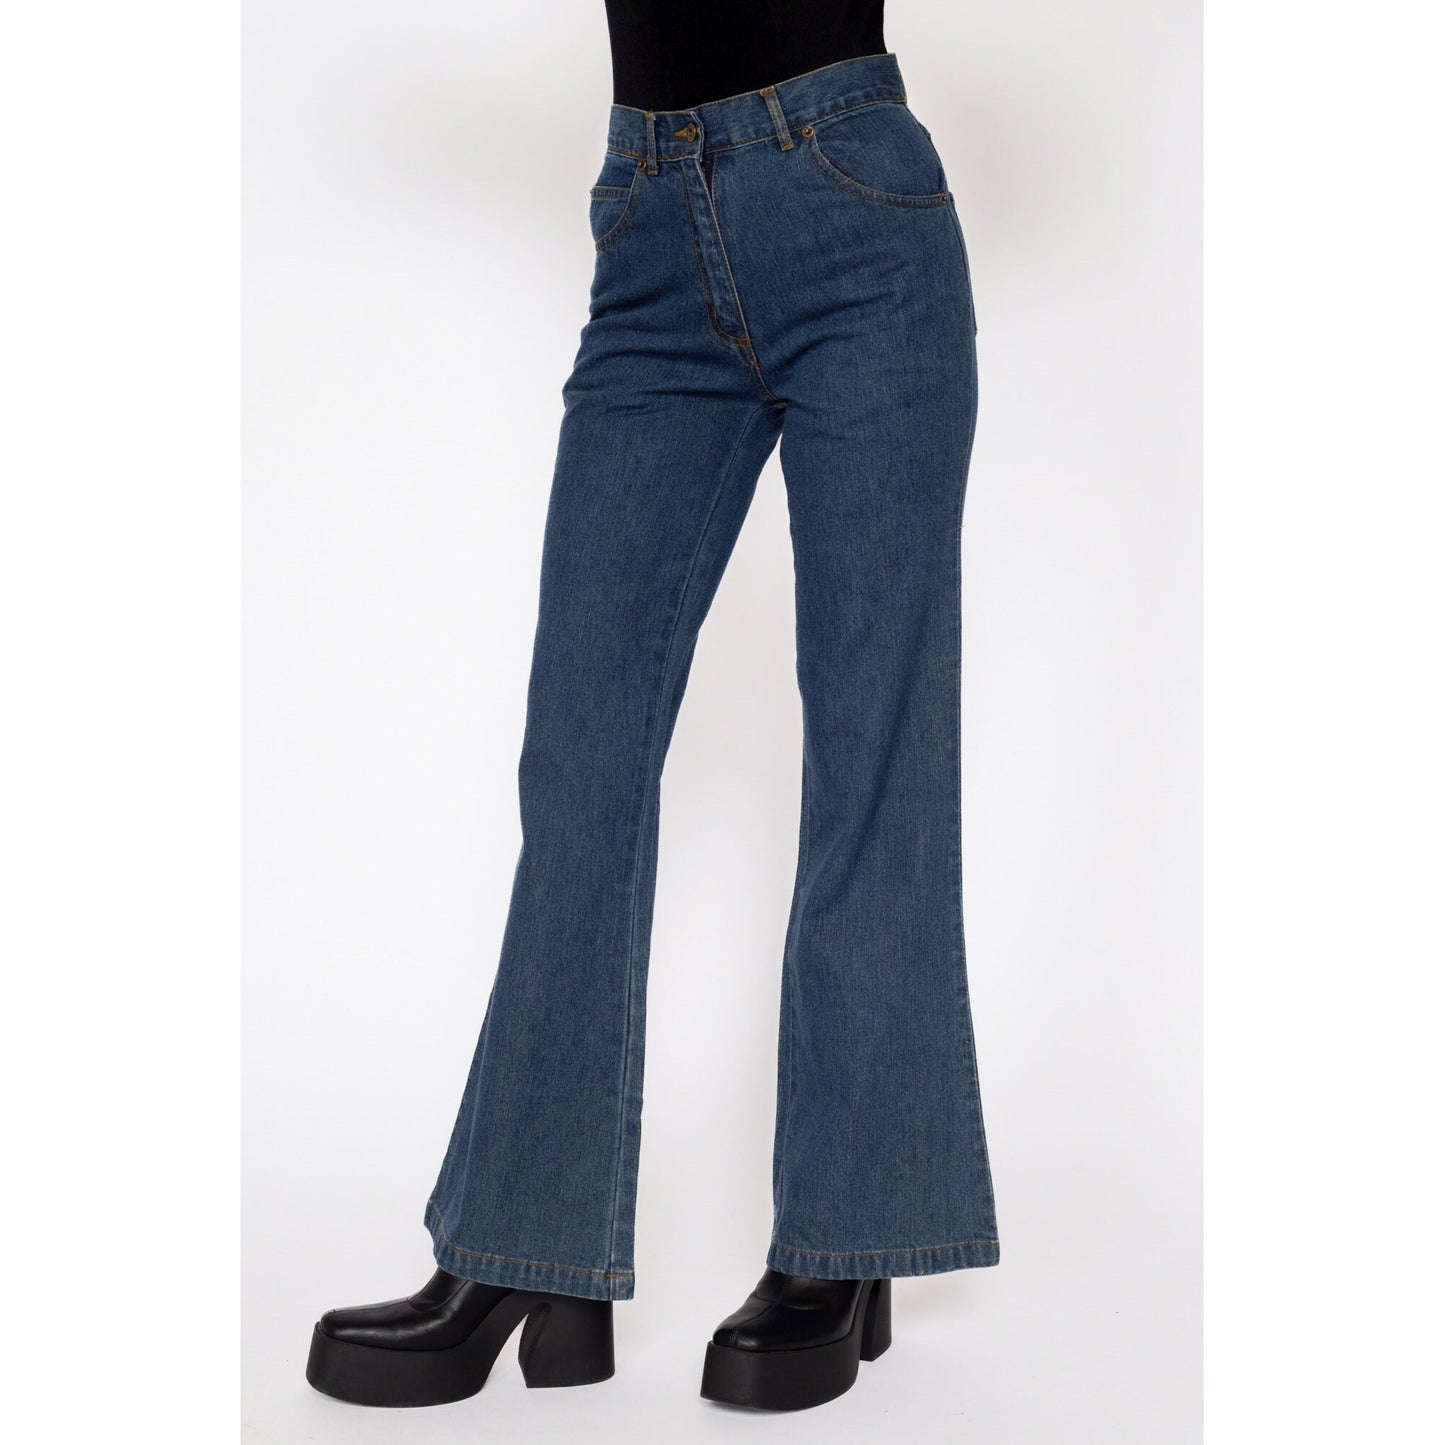 Petite XS 90s Dark Wash Denim Flared Jeans 25" | Vintage High Waisted Bell Bottom Jeans